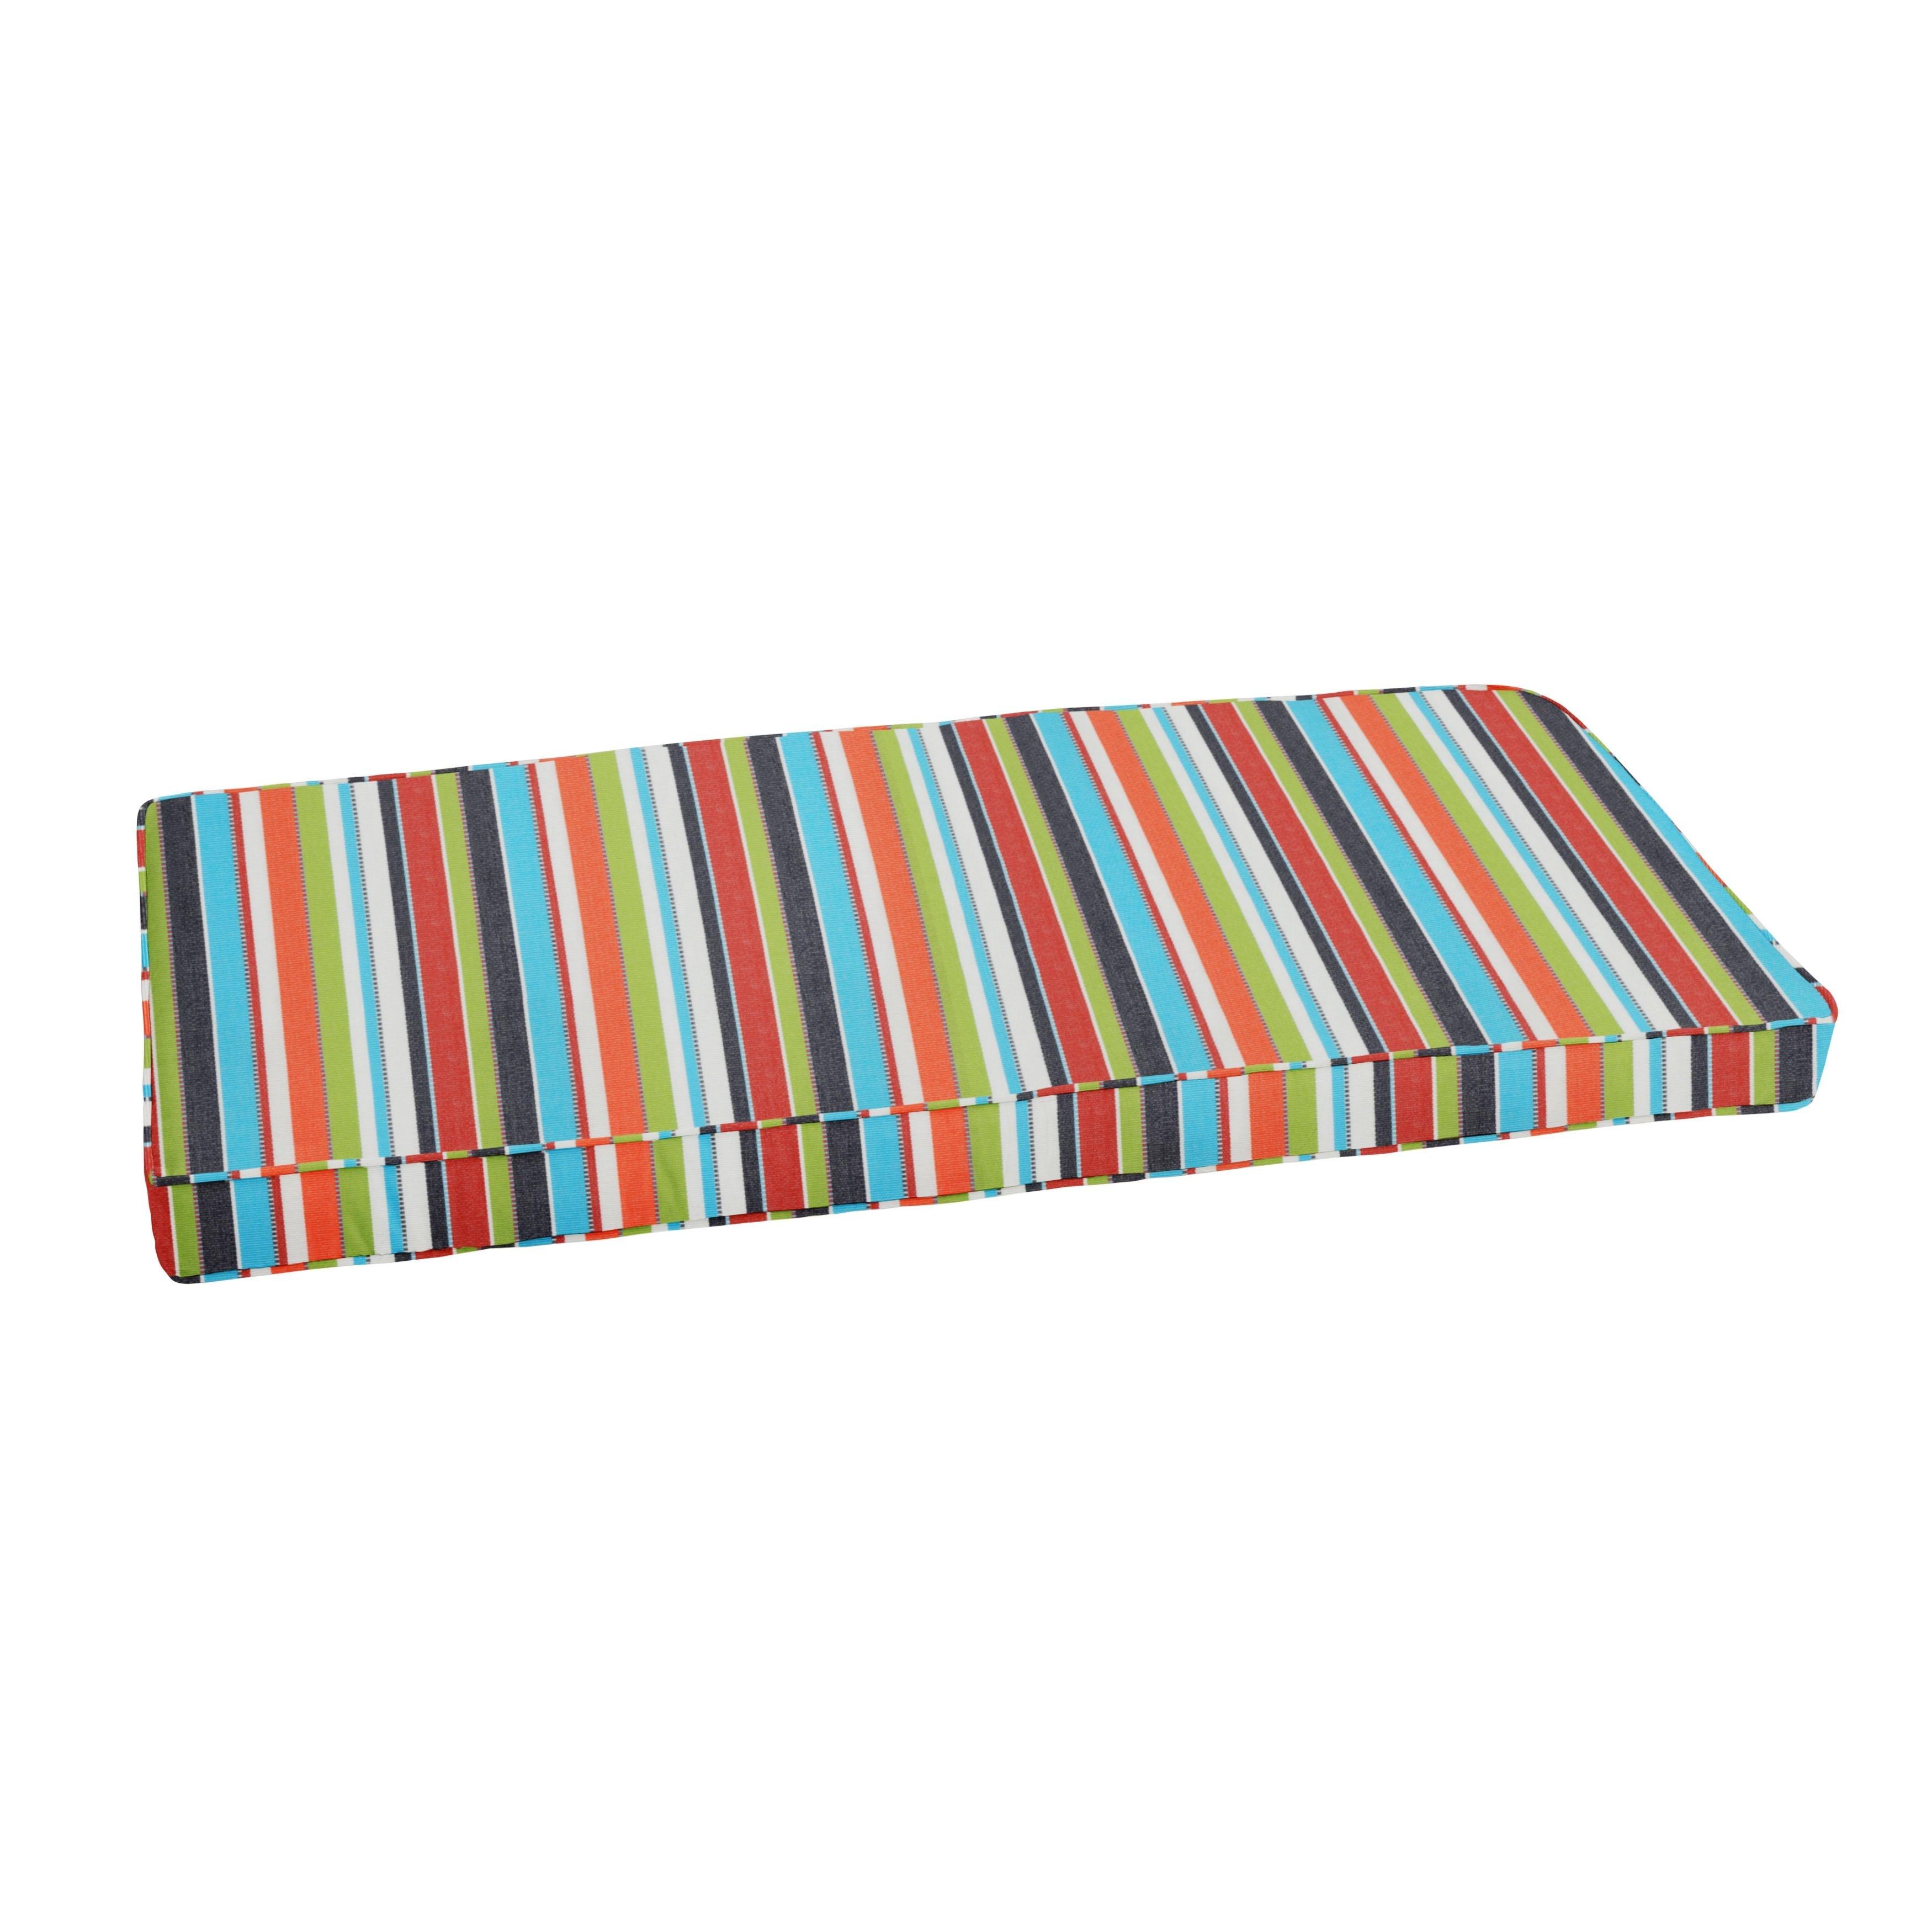  Sorra Home Indoor/Outdoor Corded Bench Cushion, 56x19.5,  Sunbrella-Spectrum Peacock 7 Sq Ft : Patio, Lawn & Garden